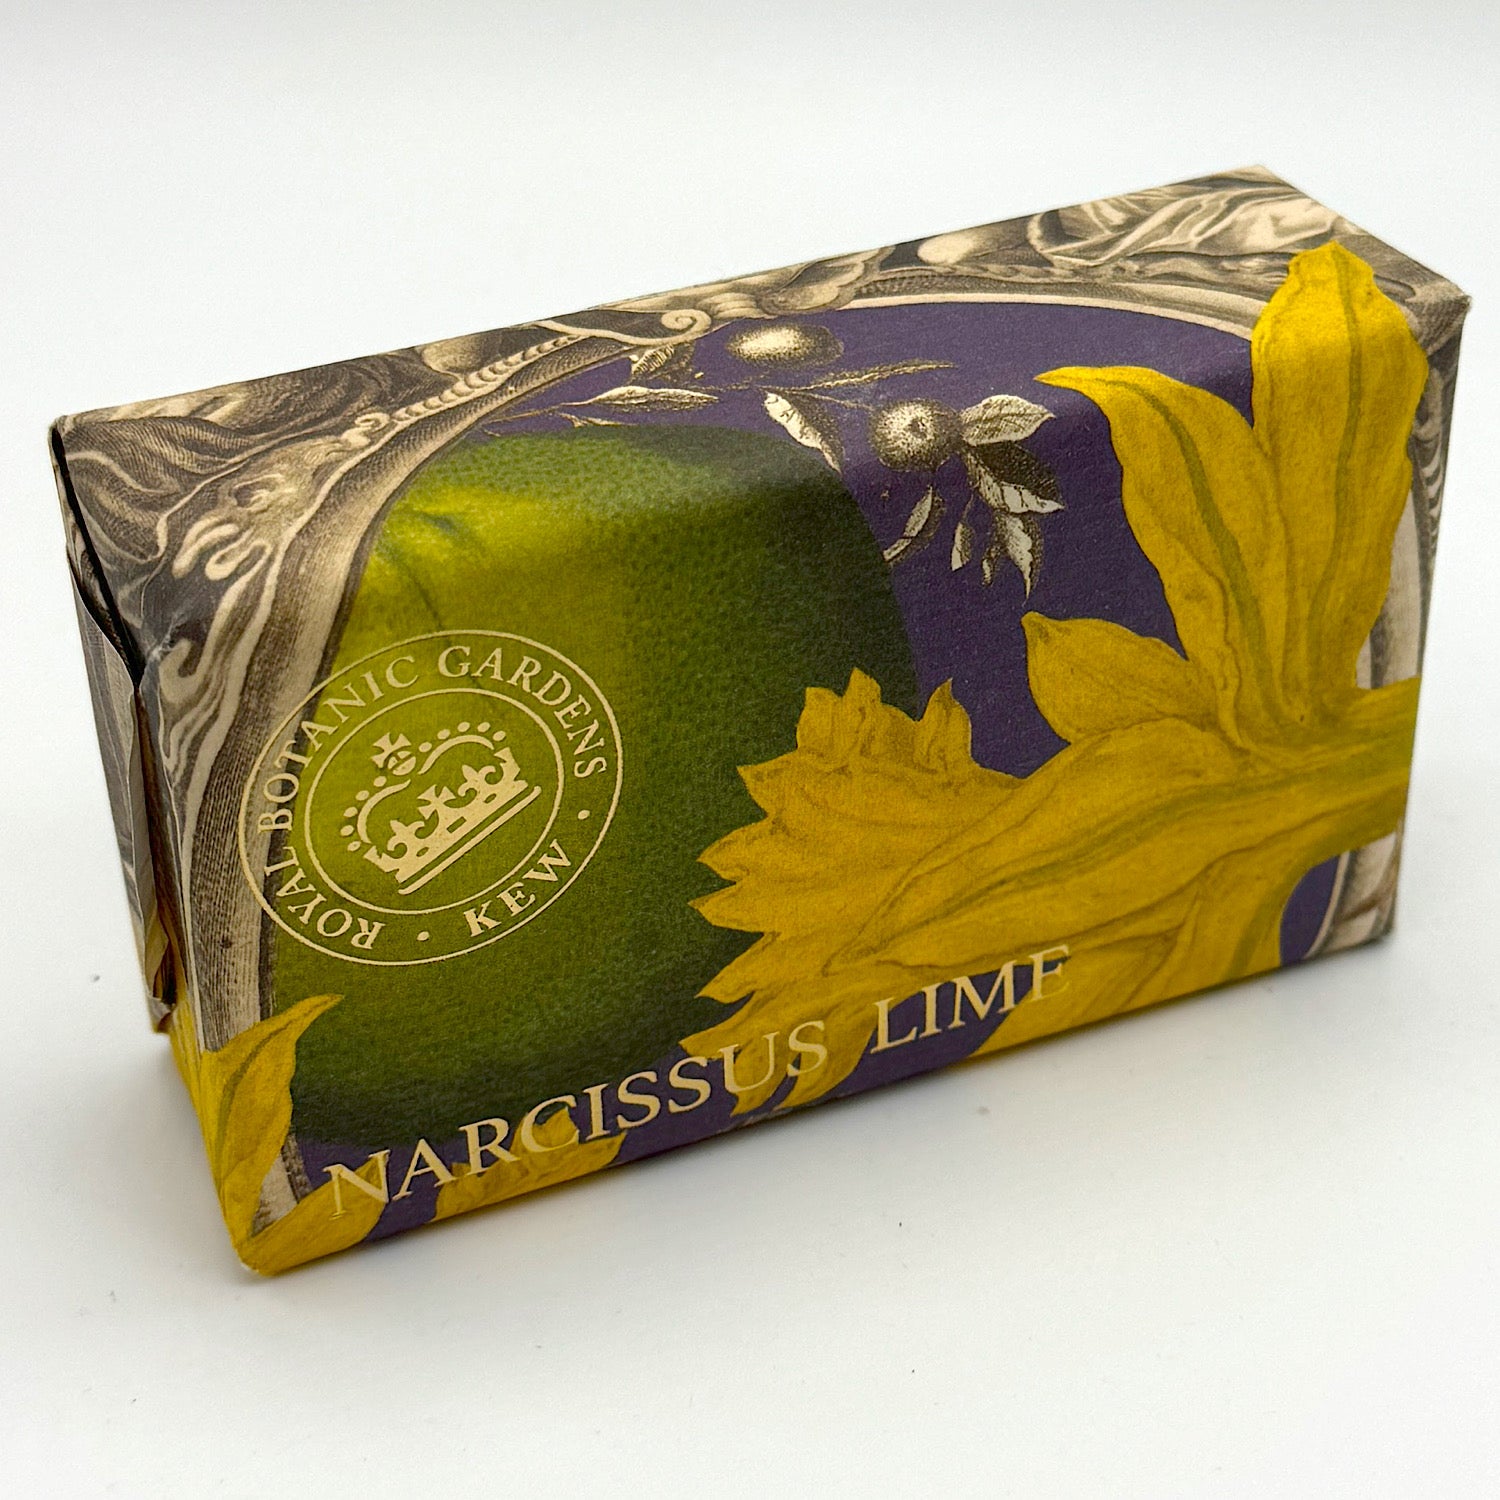 ENGLISH SOAP COMPANY Luxury Shea Soap Narcissus Slime / KEW GARDEN SERIES